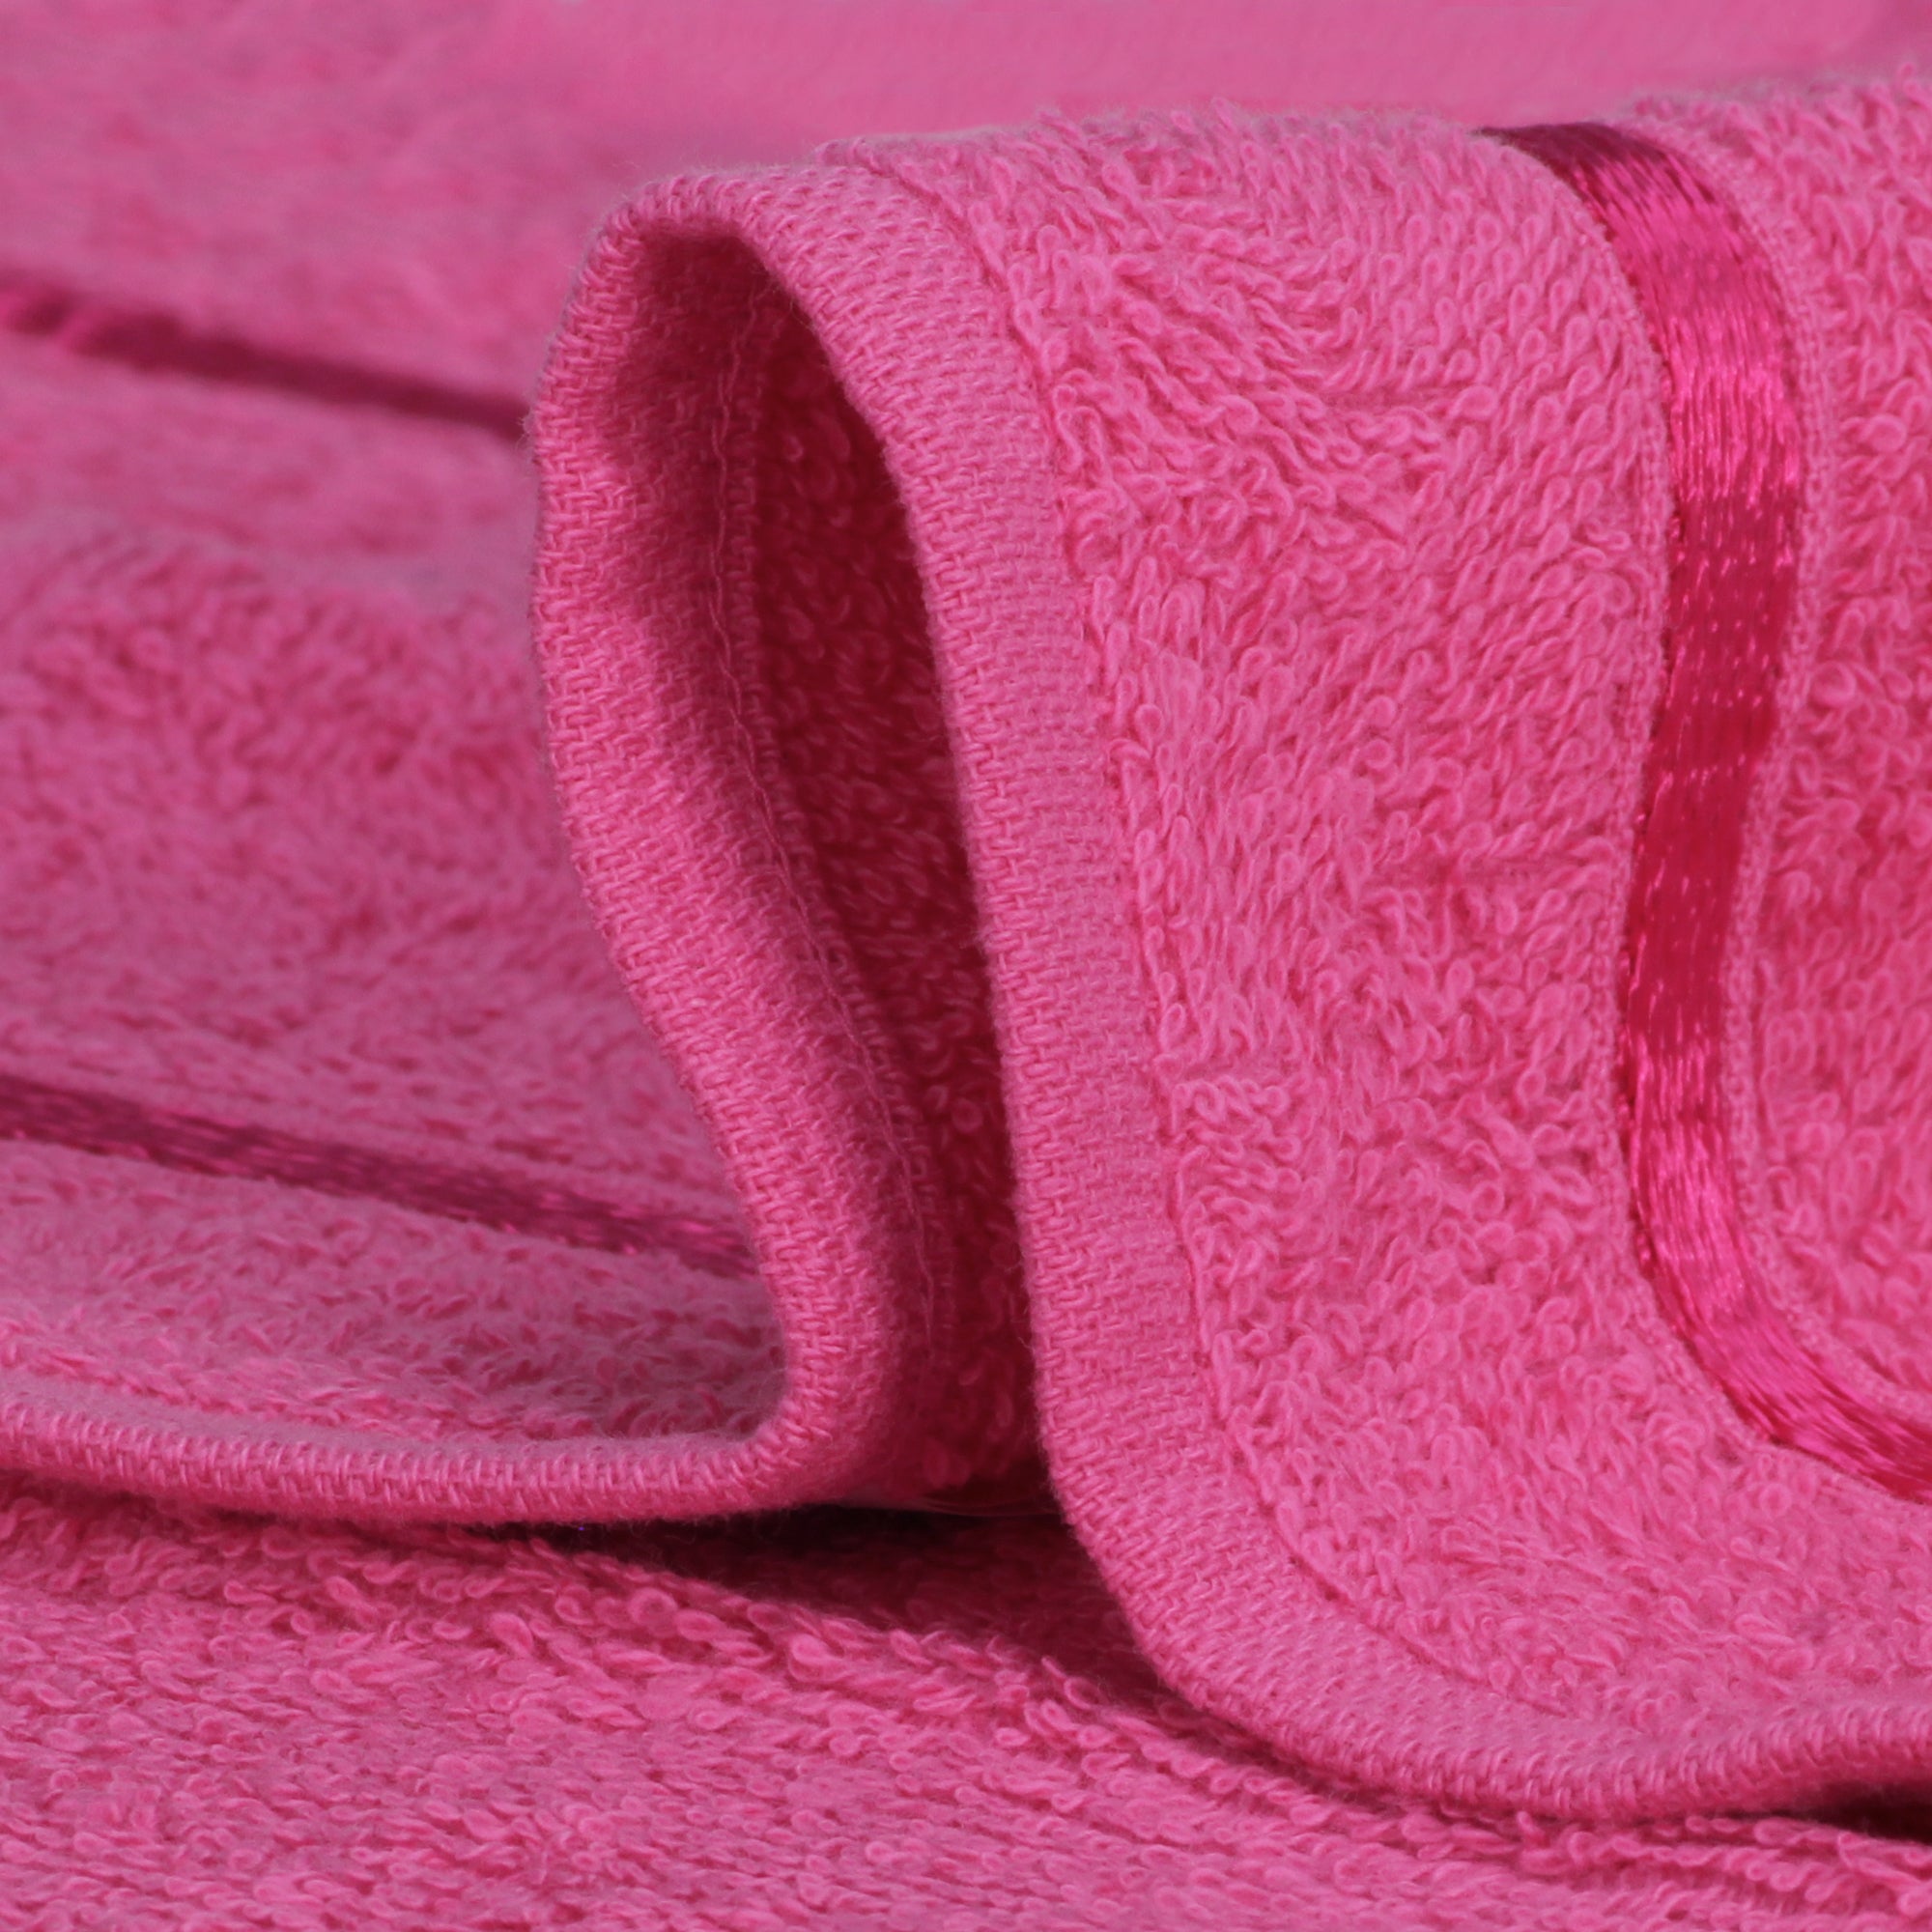 Story@Home 2 Units 100% Cotton Bath Towels - Pink